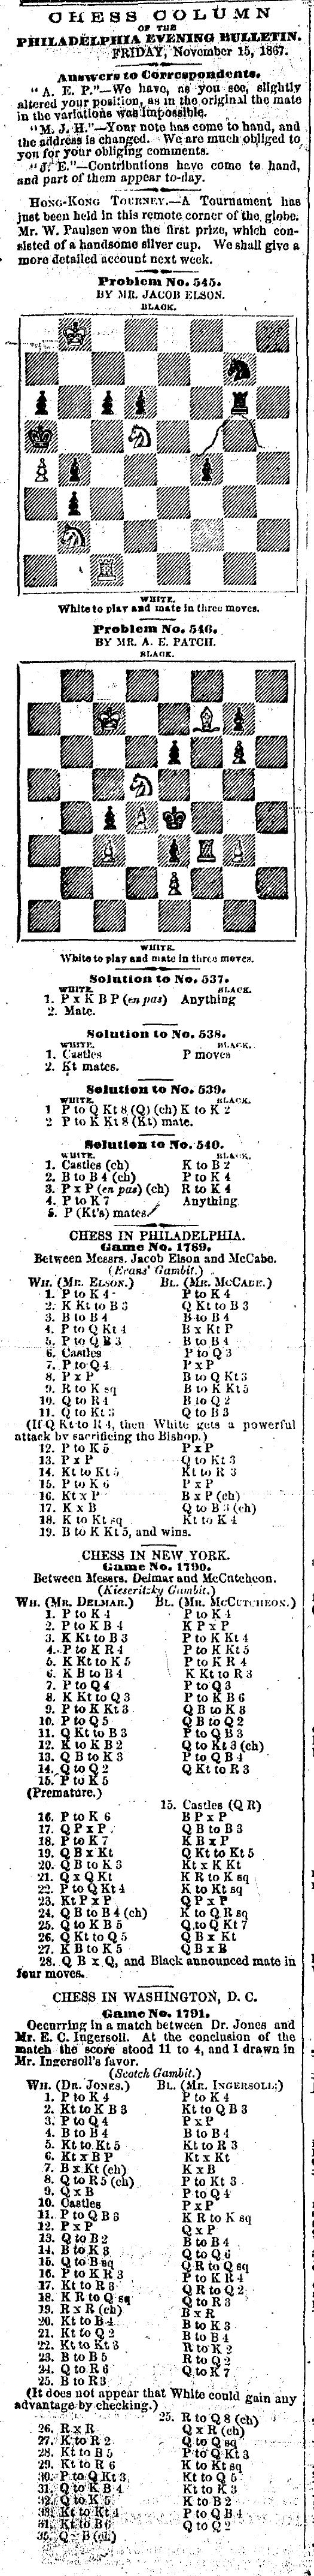 1867.11.15-01 Philadelphia Daily Evening Bulletin.jpg